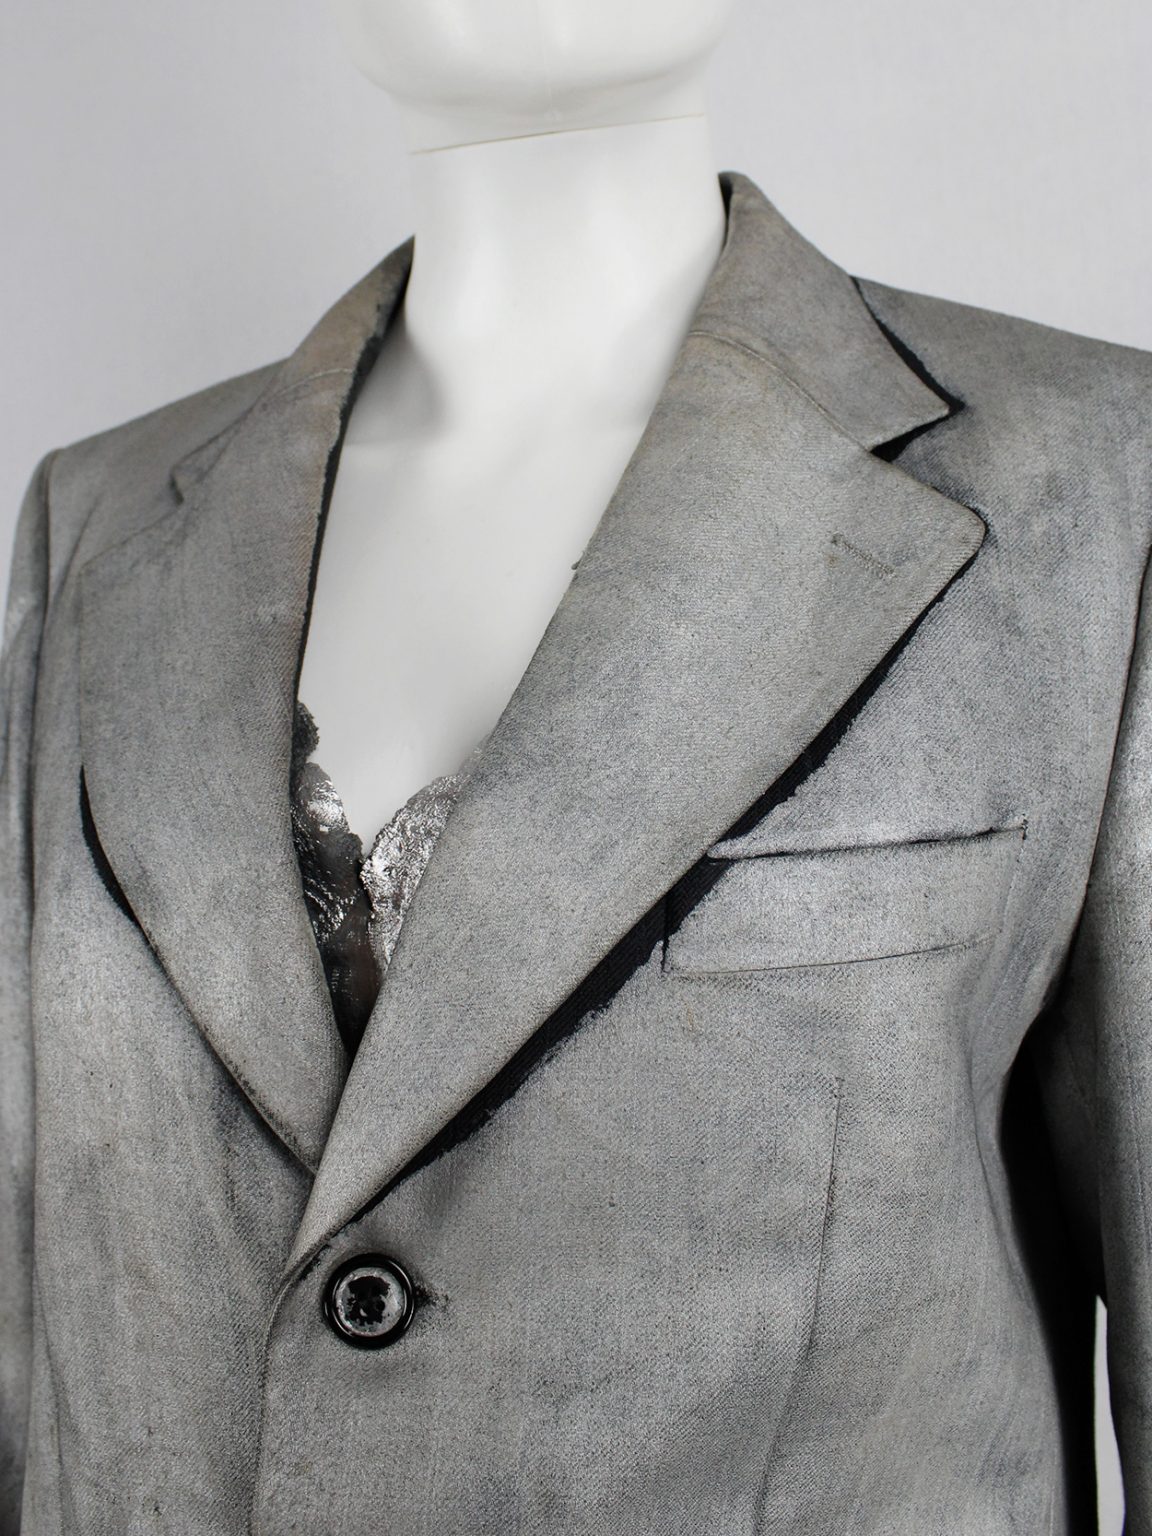 Maison Martin Margiela artisanal silver painted pinstripe blazer — fall 1999